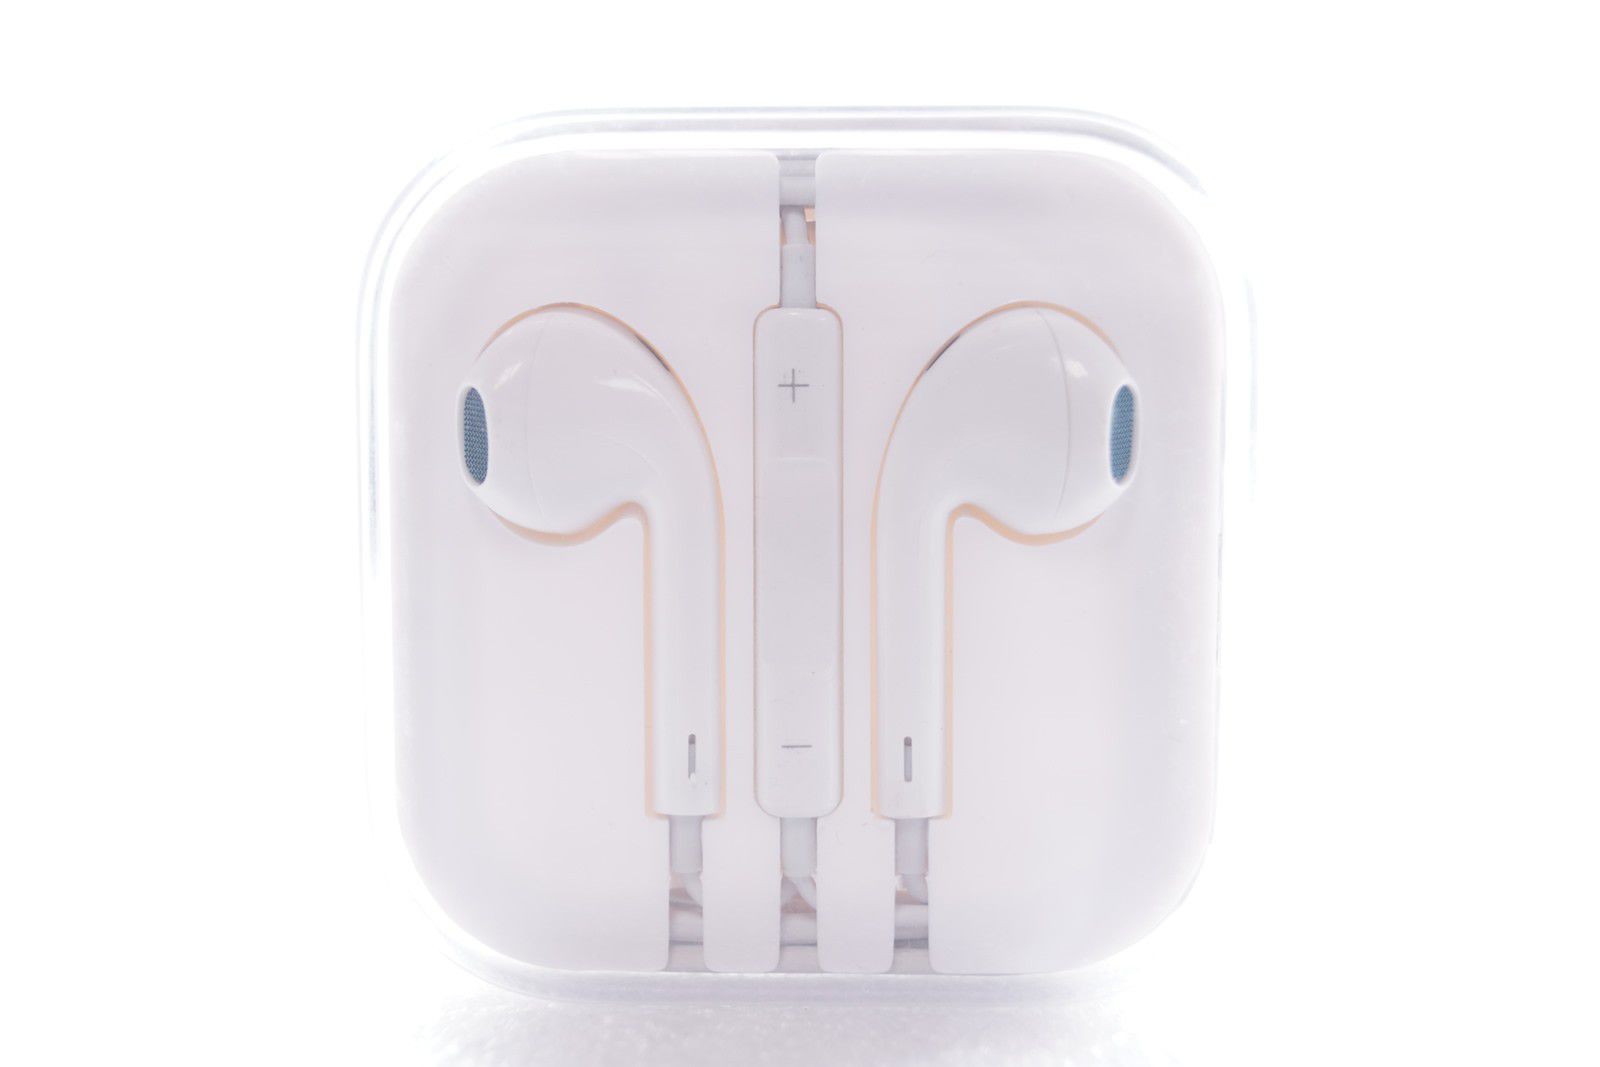 OEM Original Apple Earphones for iPhone 4/5/6 Earphones Earbuds 3.5mm Jack